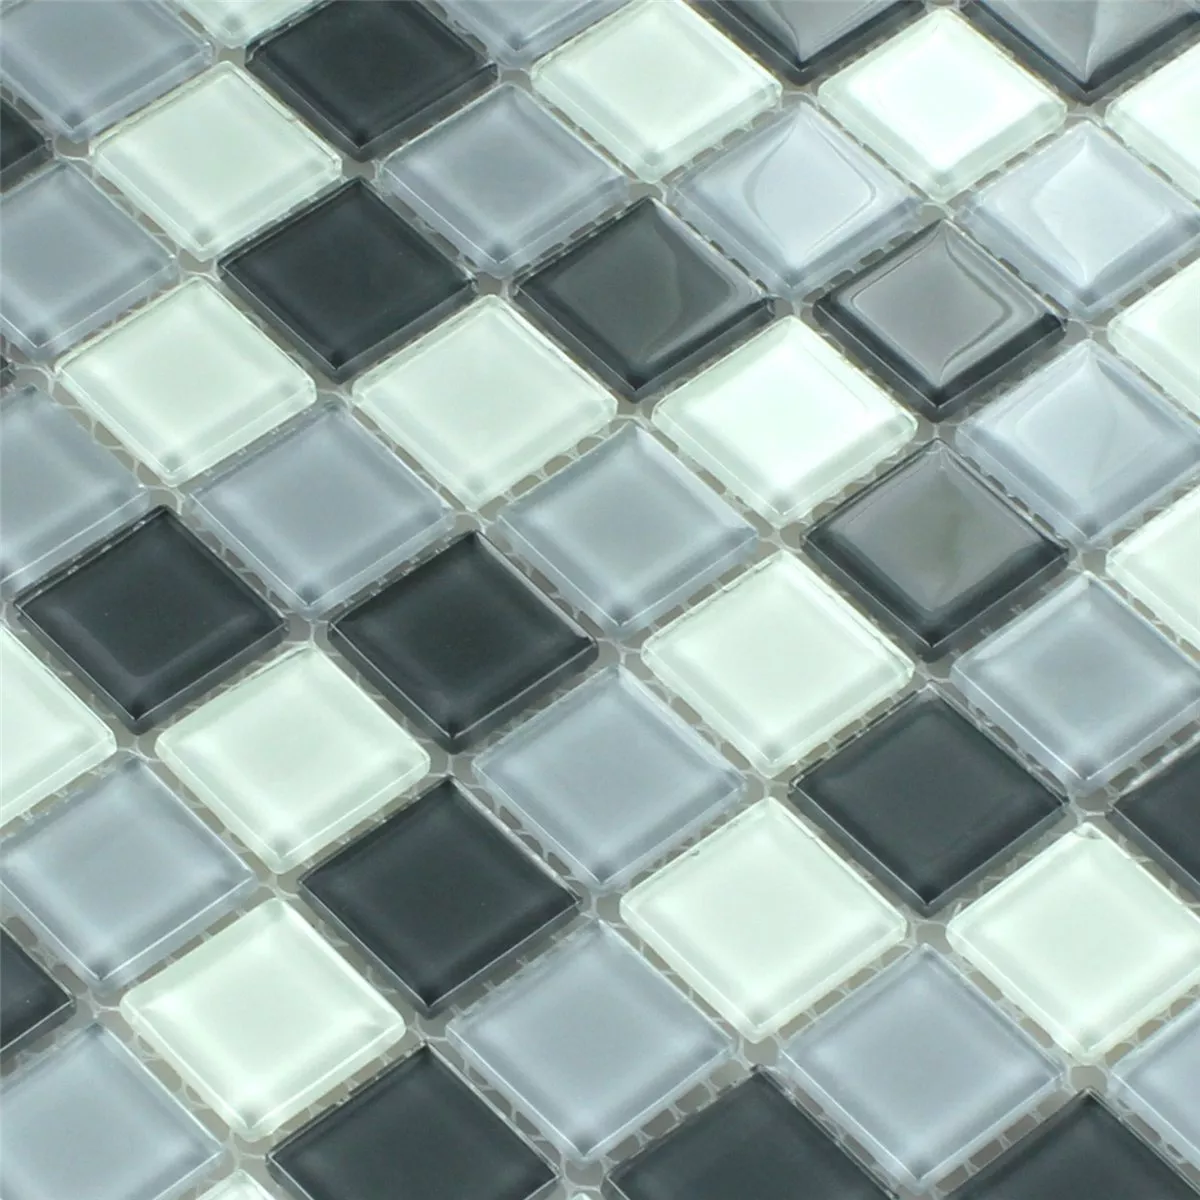 Mosaic Tiles Glass Grey Mix 25x25x4mm